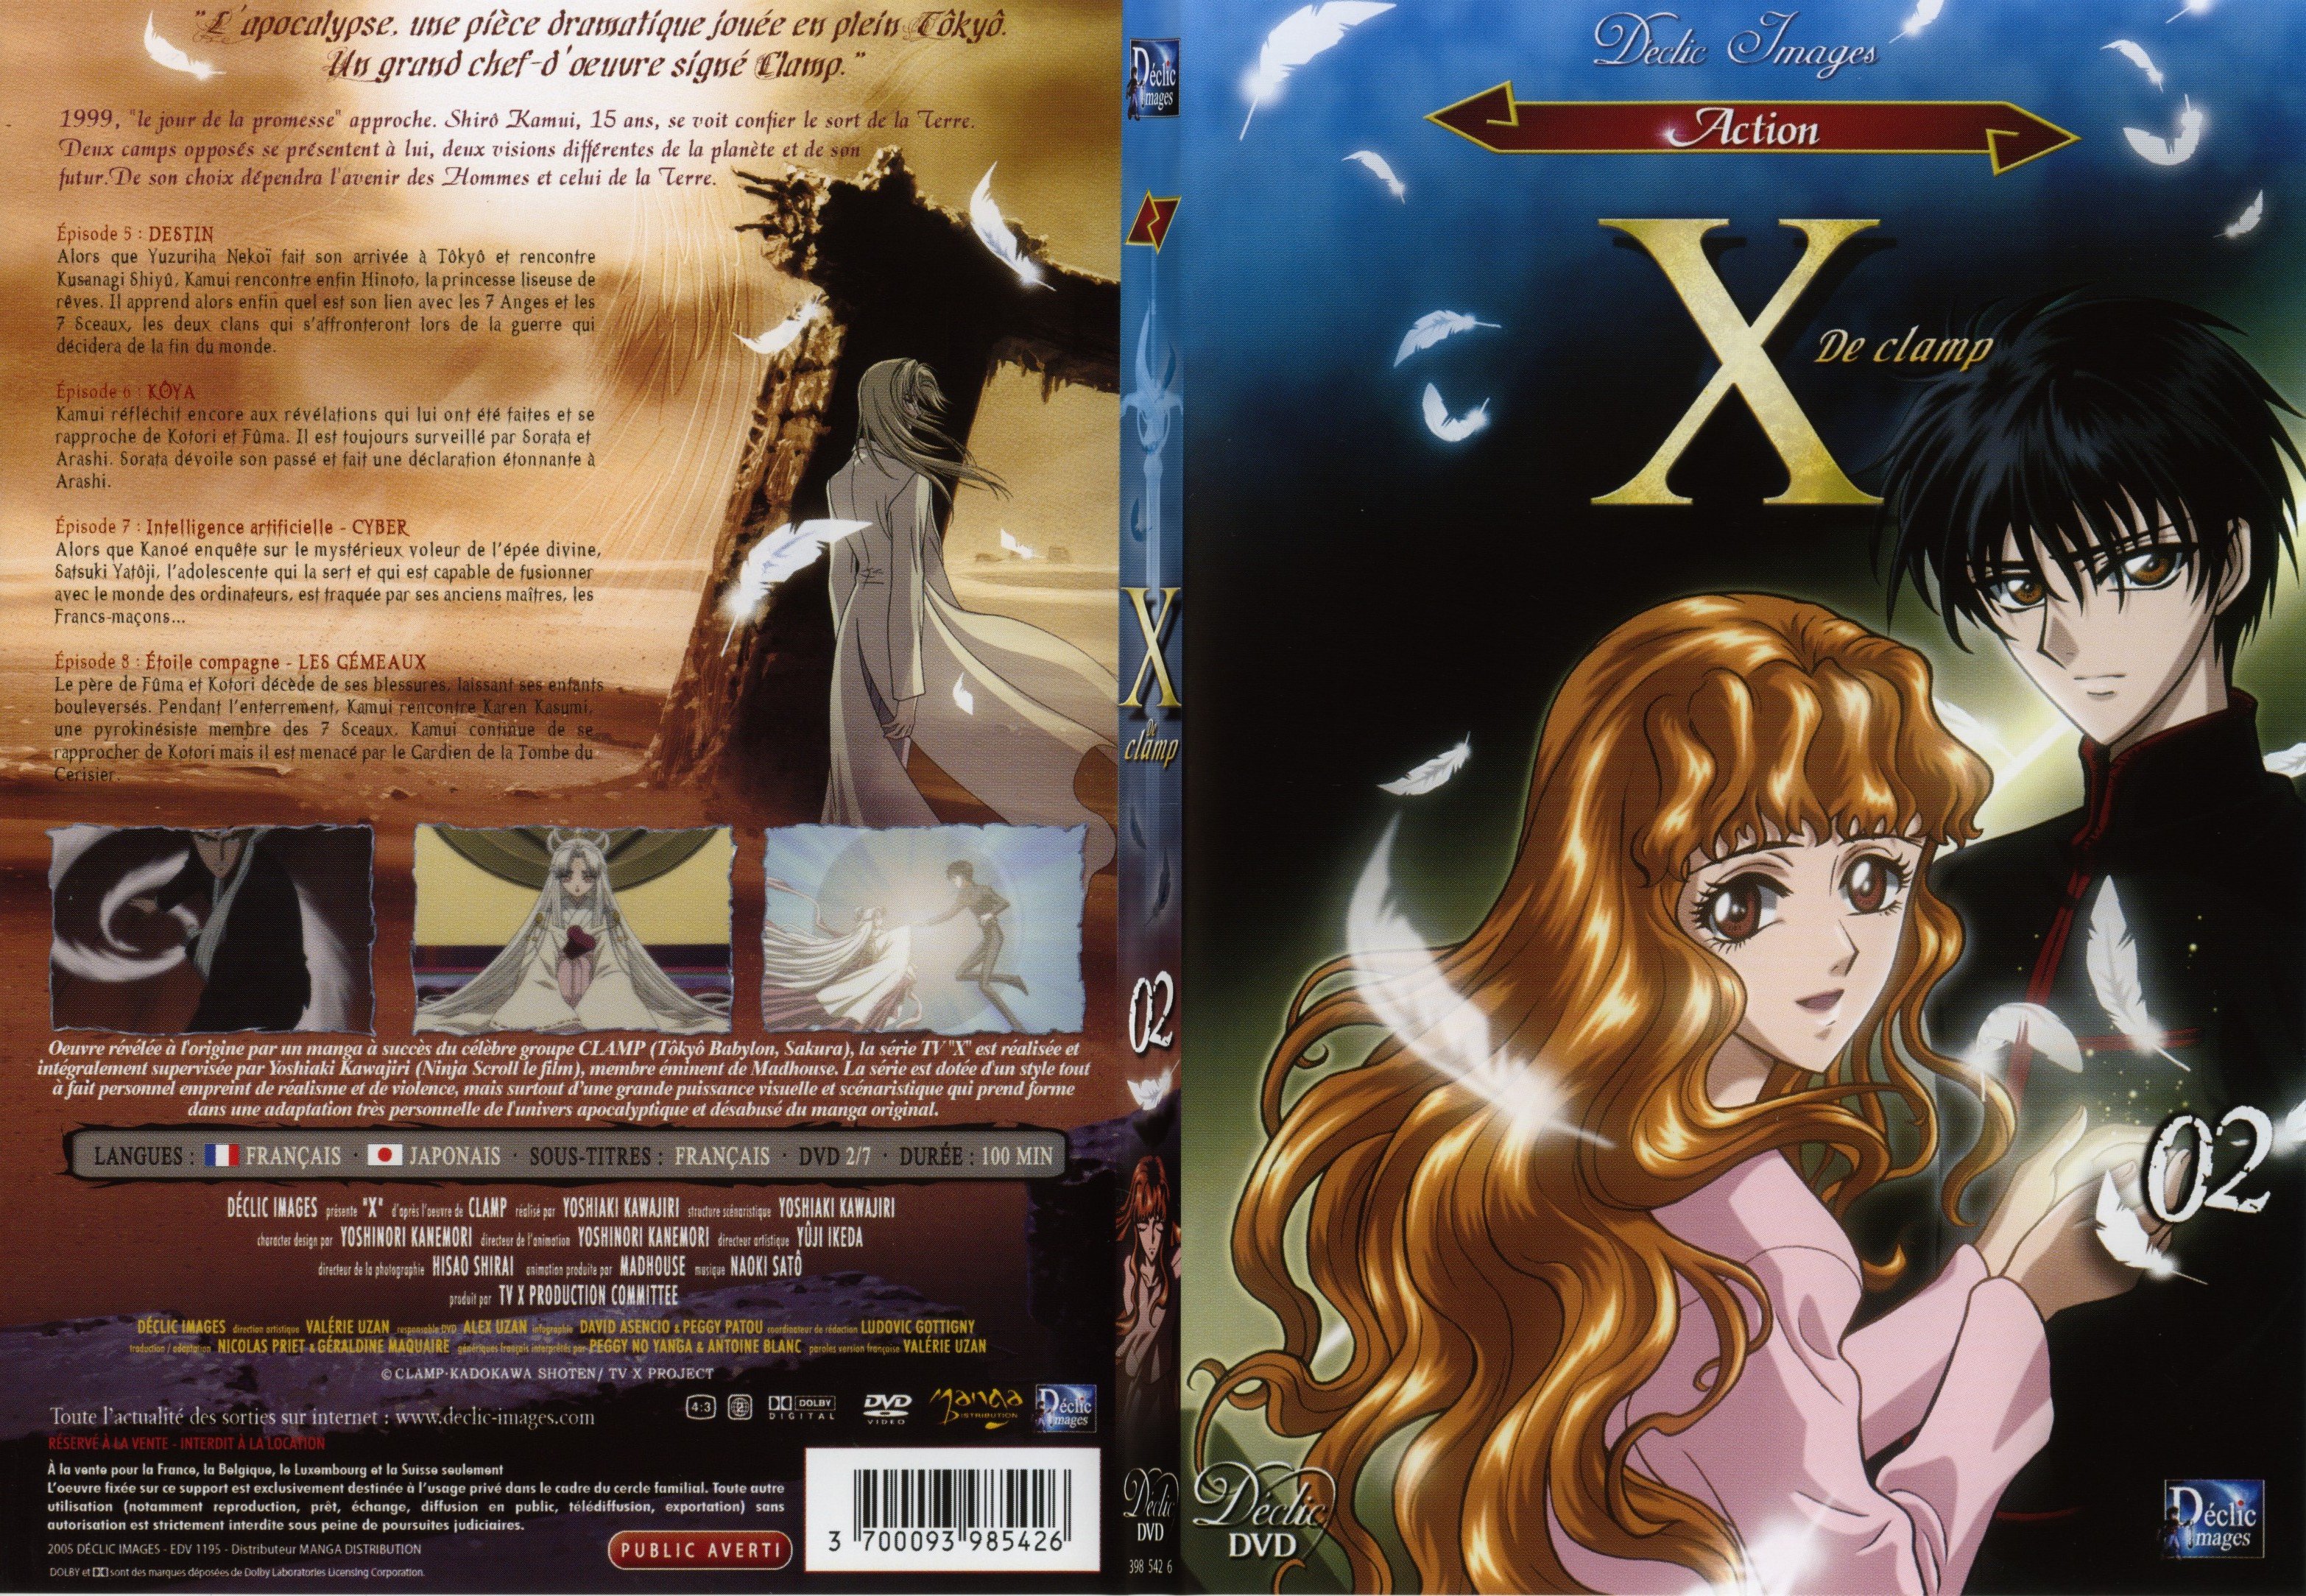 Jaquette DVD X de clamp vol 2 - SLIM